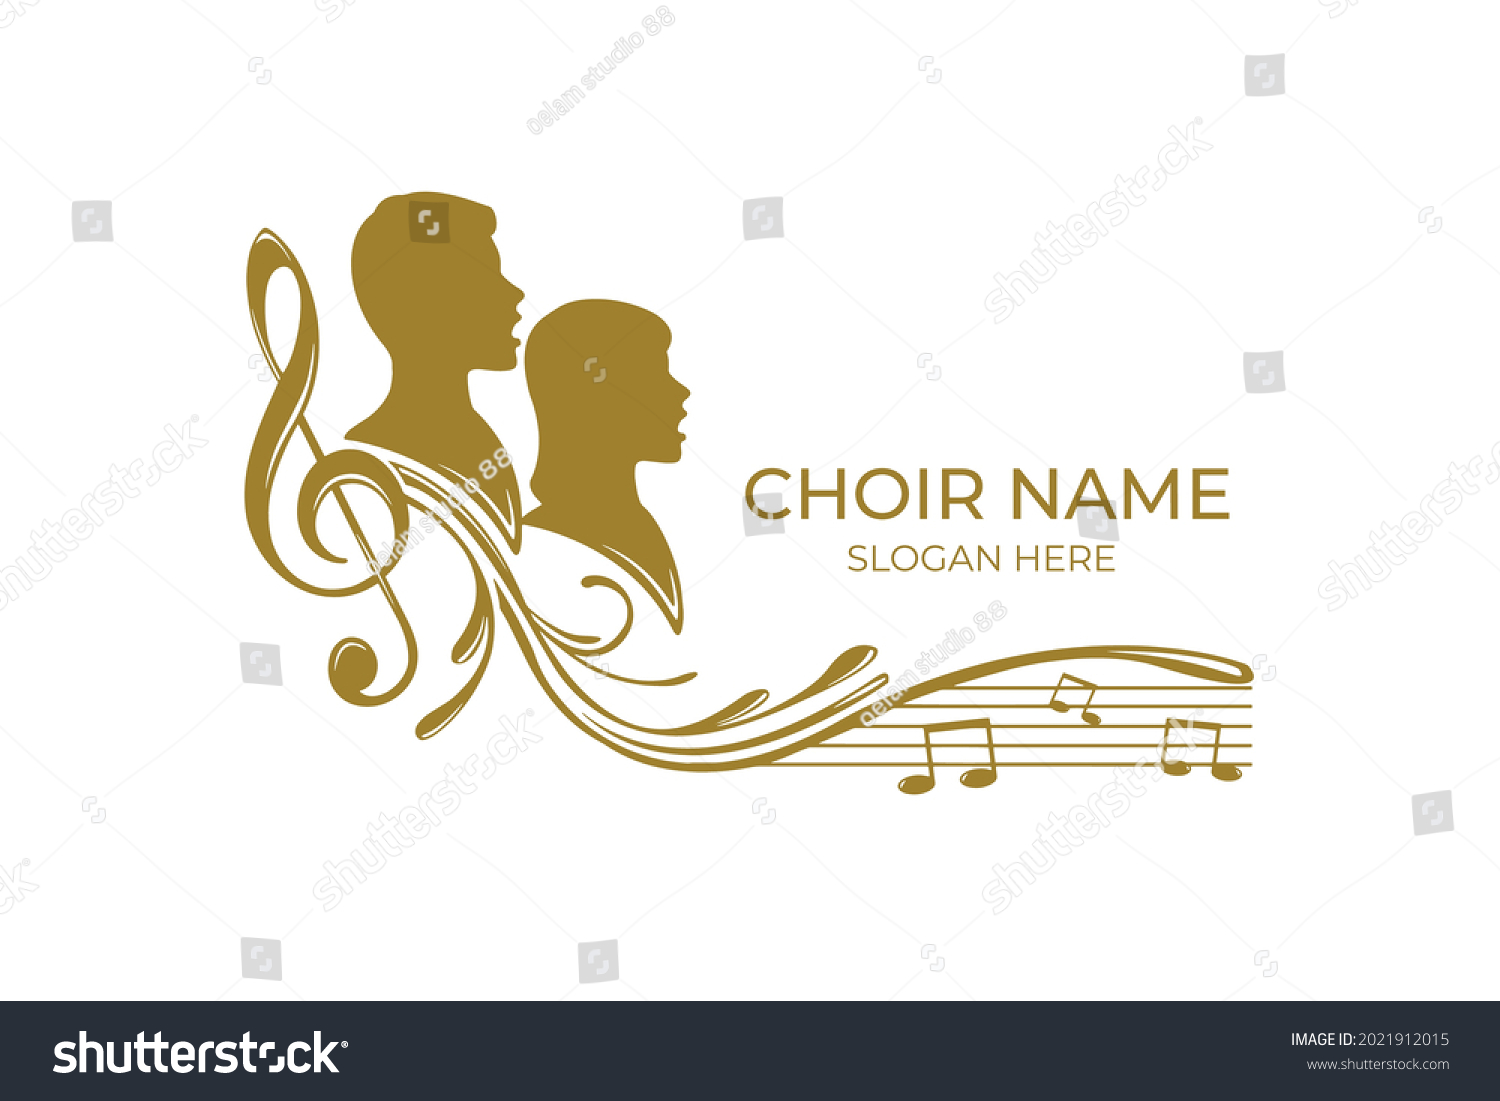 Choir Logo Template Free Download